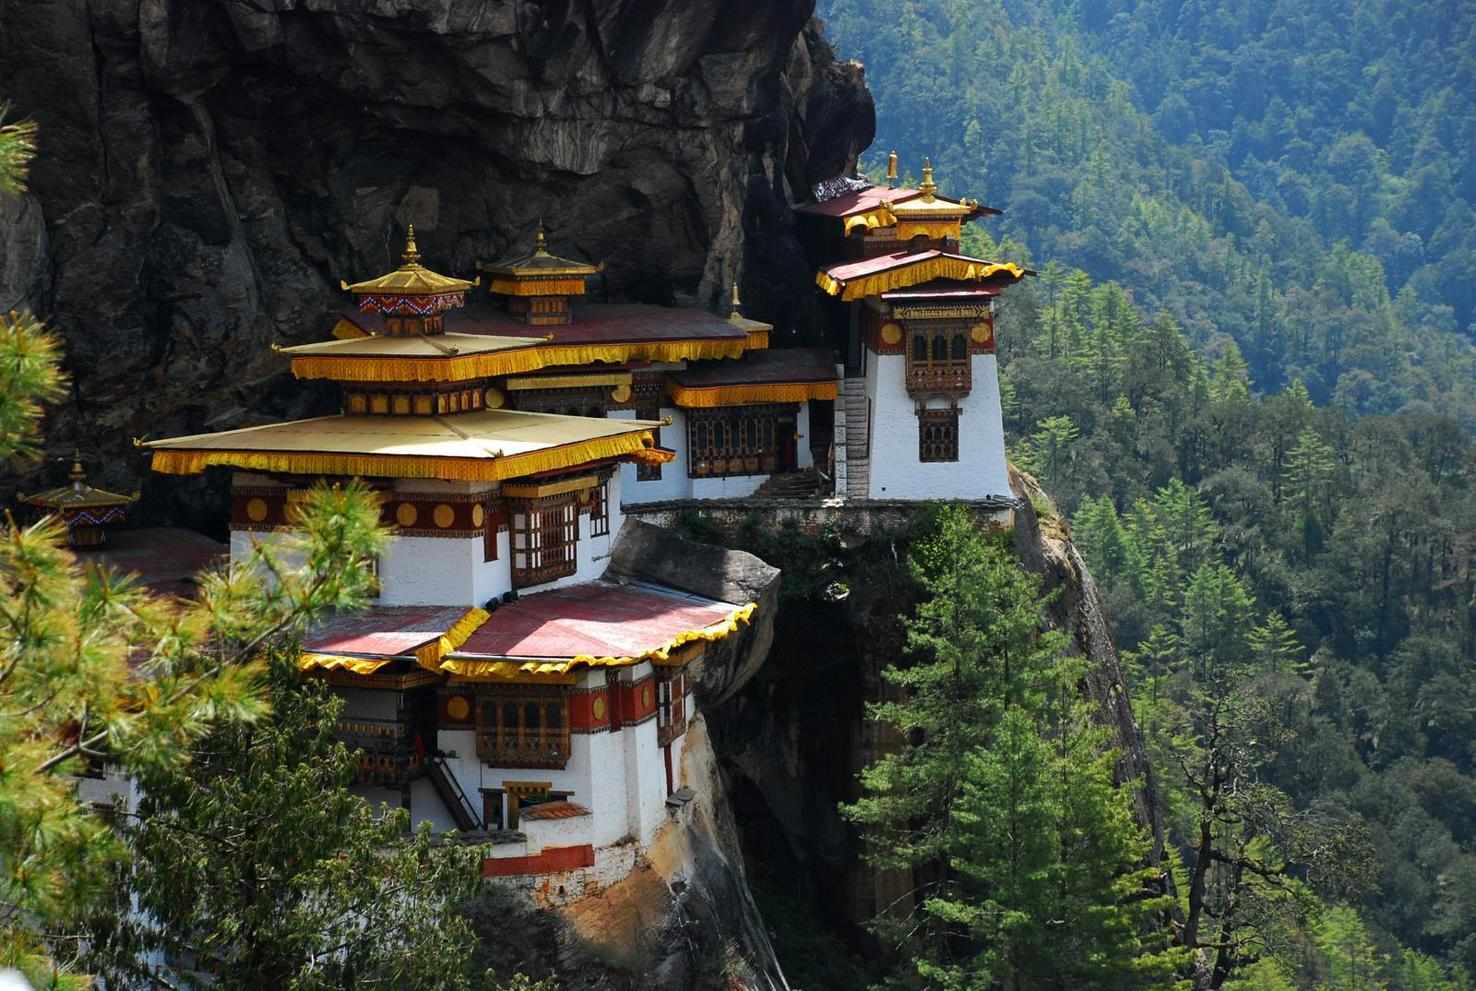 Bhutan Tour Package